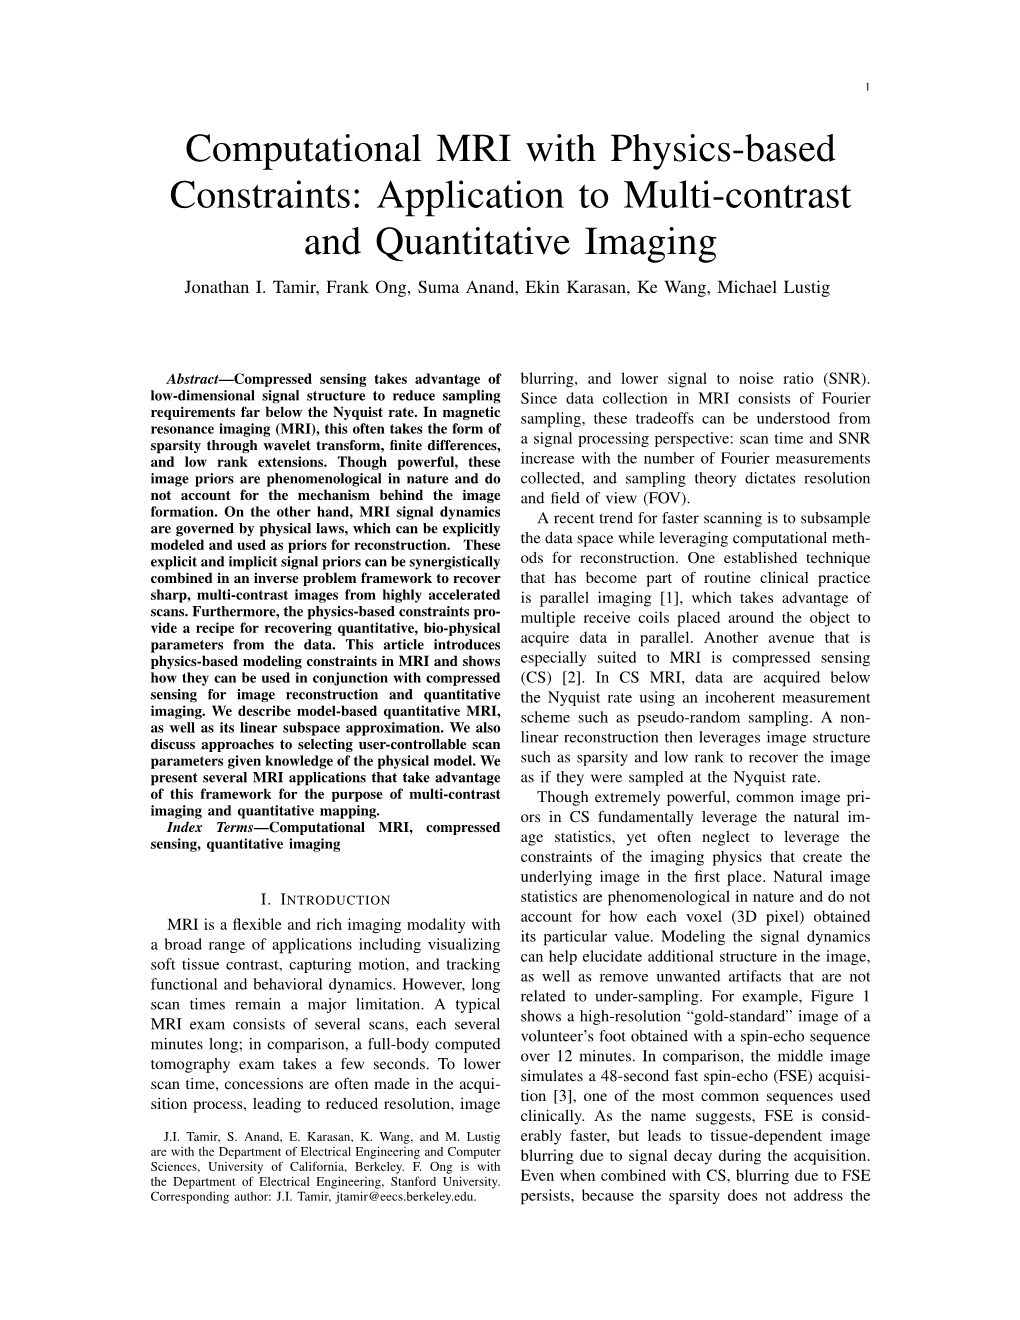 Computational MRI with Physics-Based Constraints: Application to Multi-Contrast and Quantitative Imaging Jonathan I